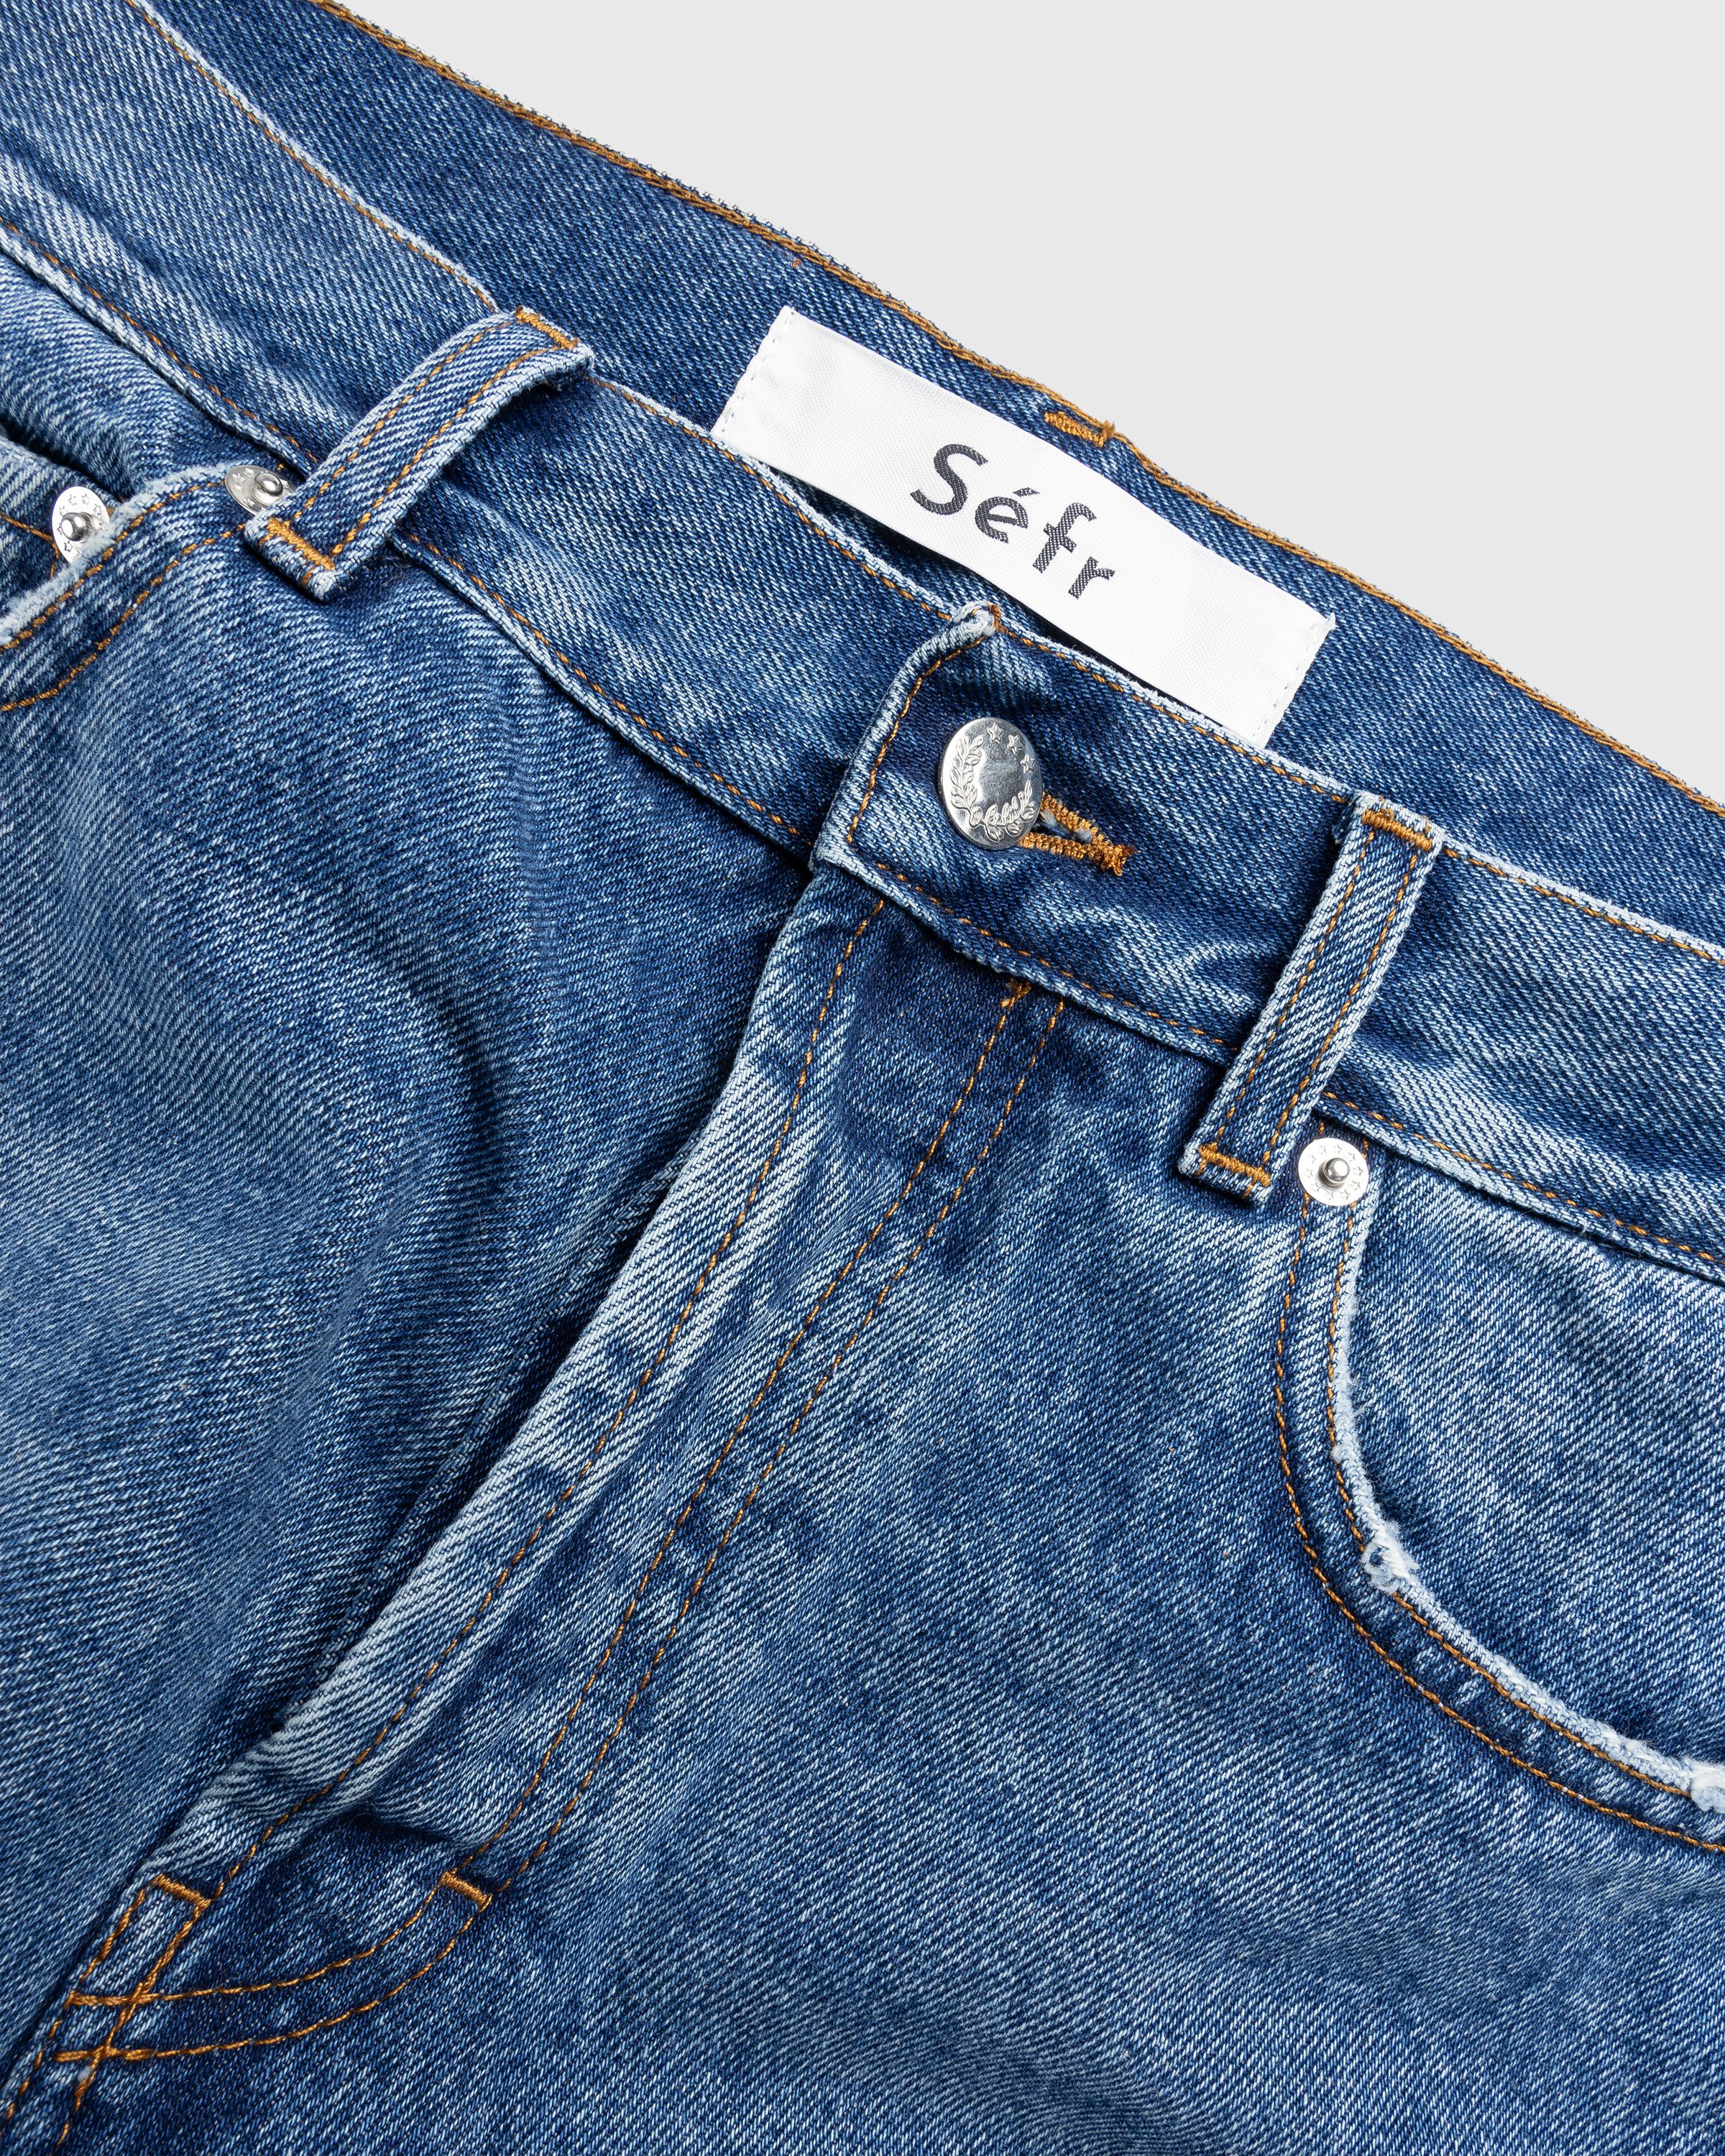 Séfr - Twisted Cut Jeans Two Split Indigo - Clothing - Blue - Image 5